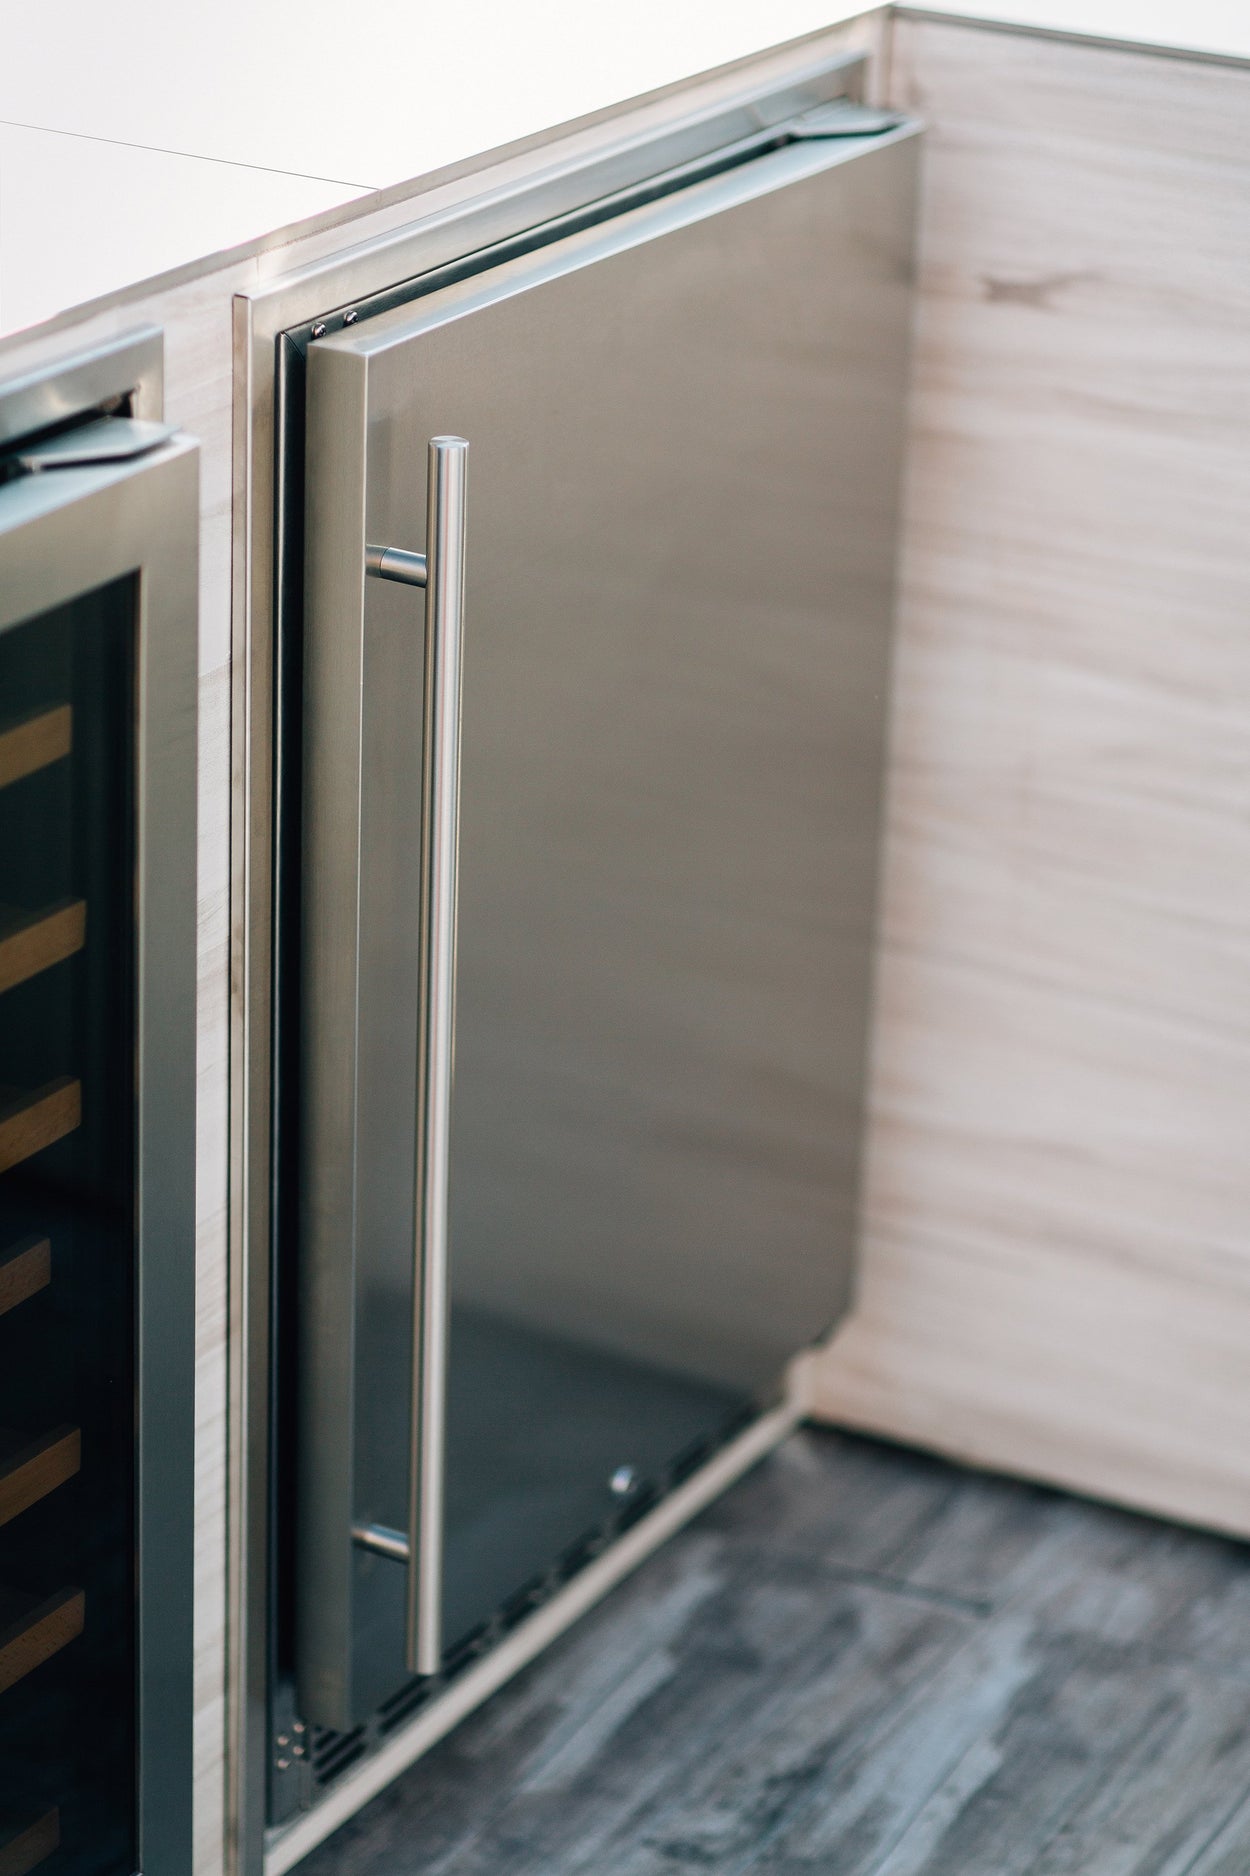 24" 5.3c Deluxe Outdoor Rated Refrigerator